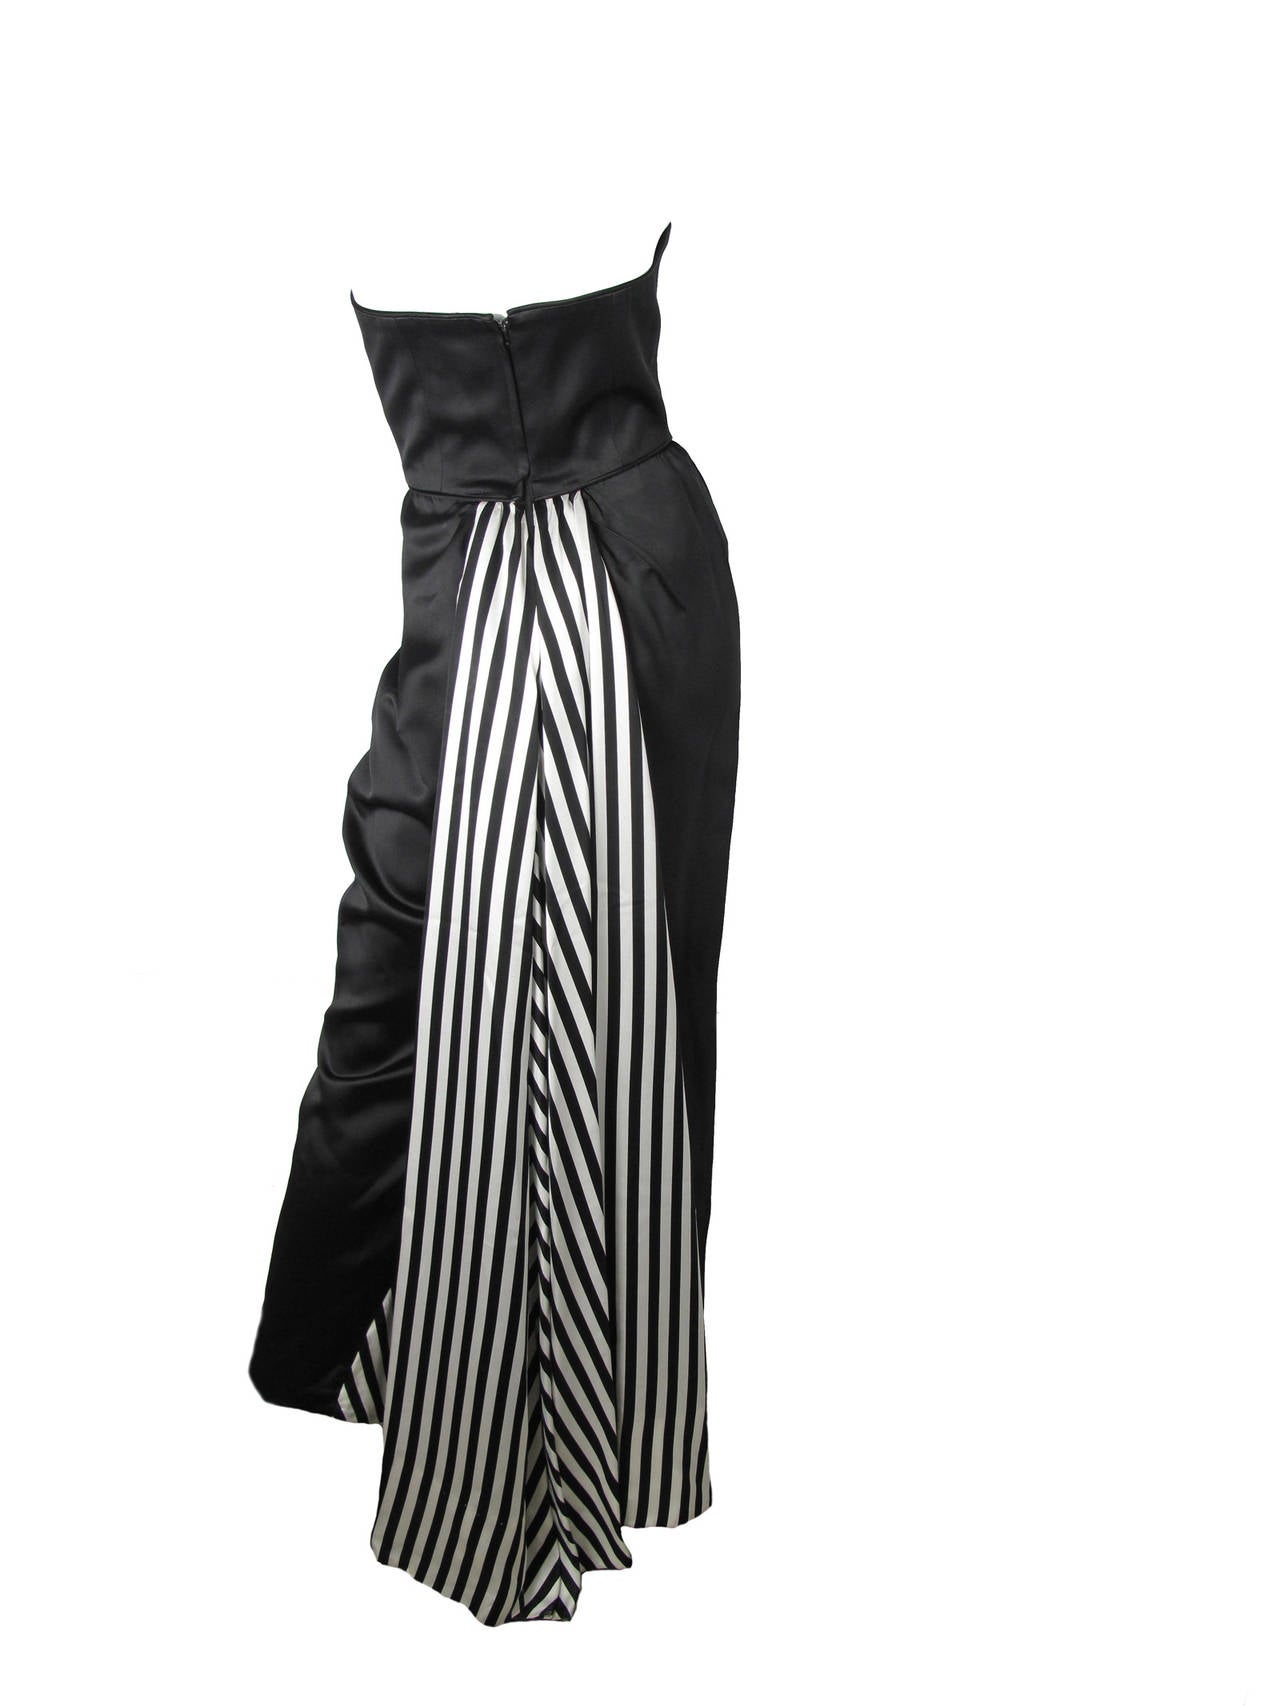 black and white striped strapless dress